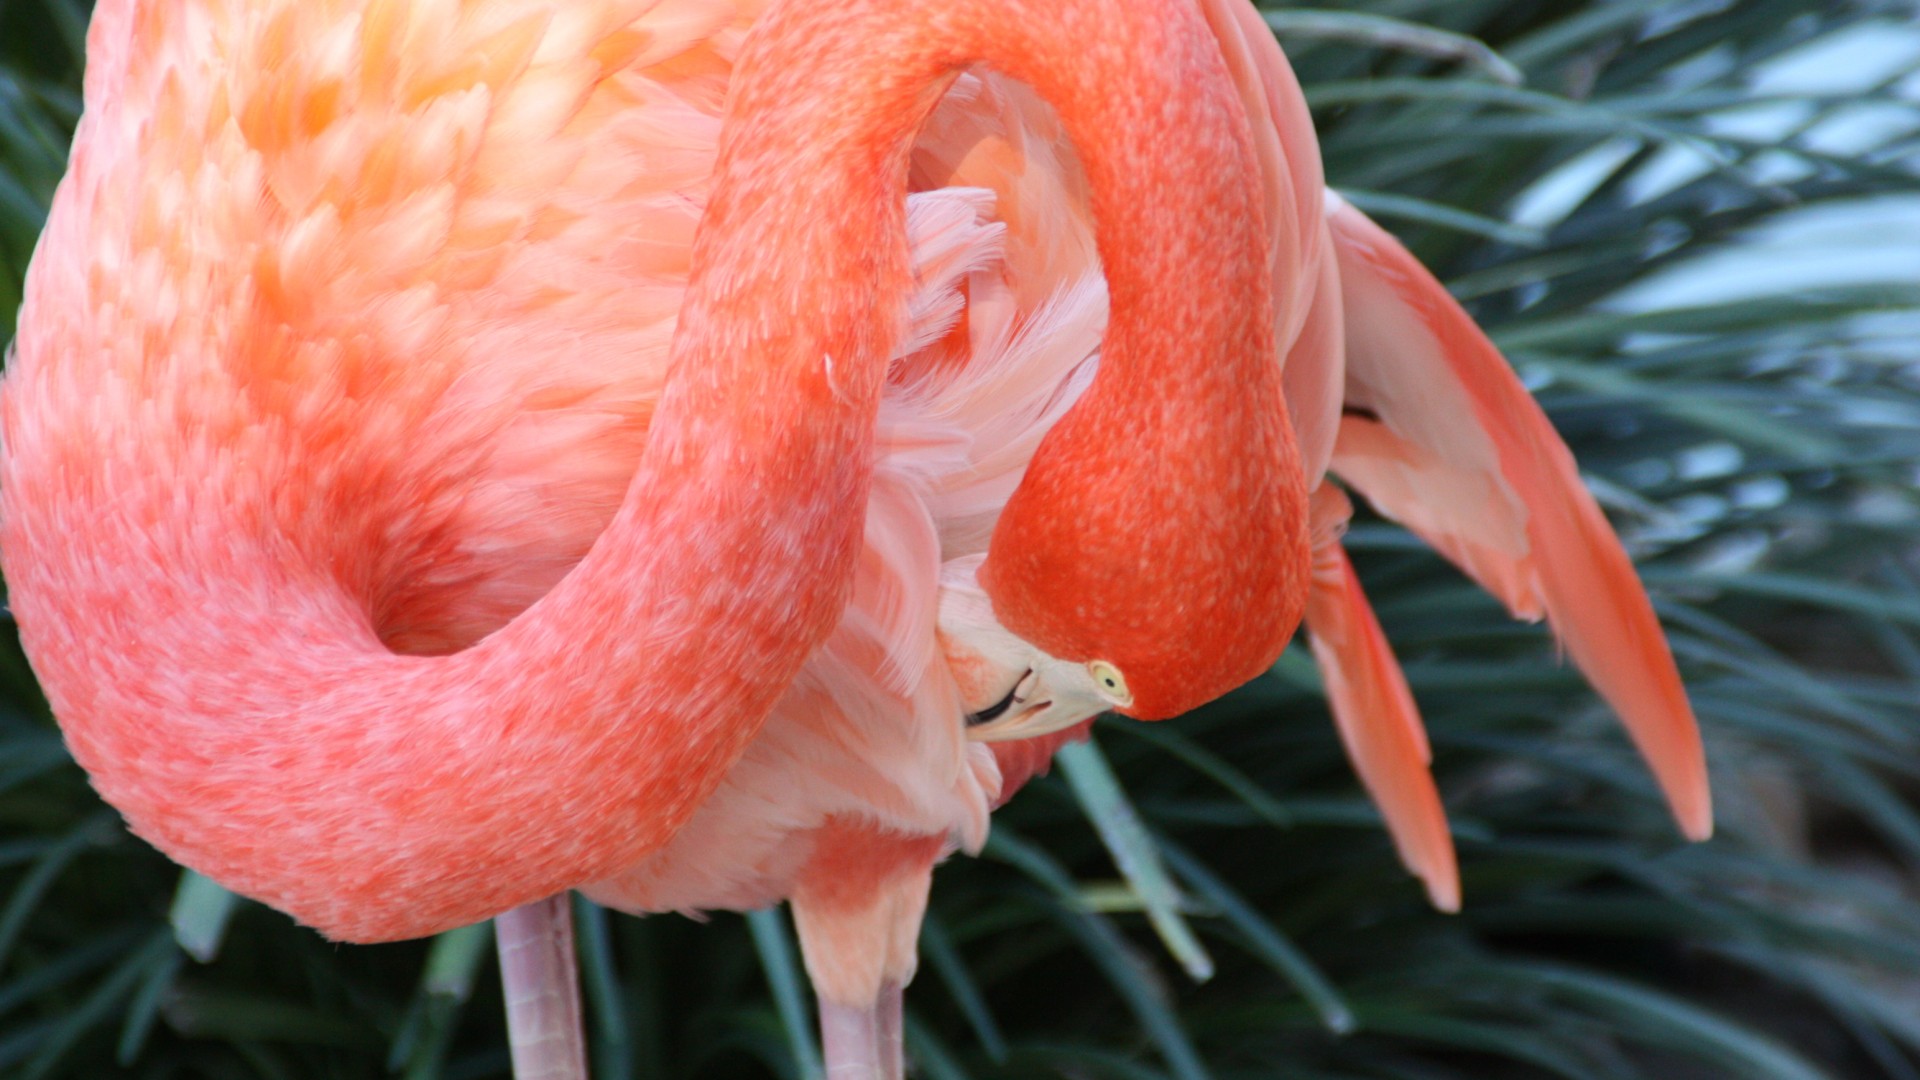 Flamingo, HD, 4k wallpaper, Sun Diego, zoo, bird, red, plumage, tourism, pond (horizontal)